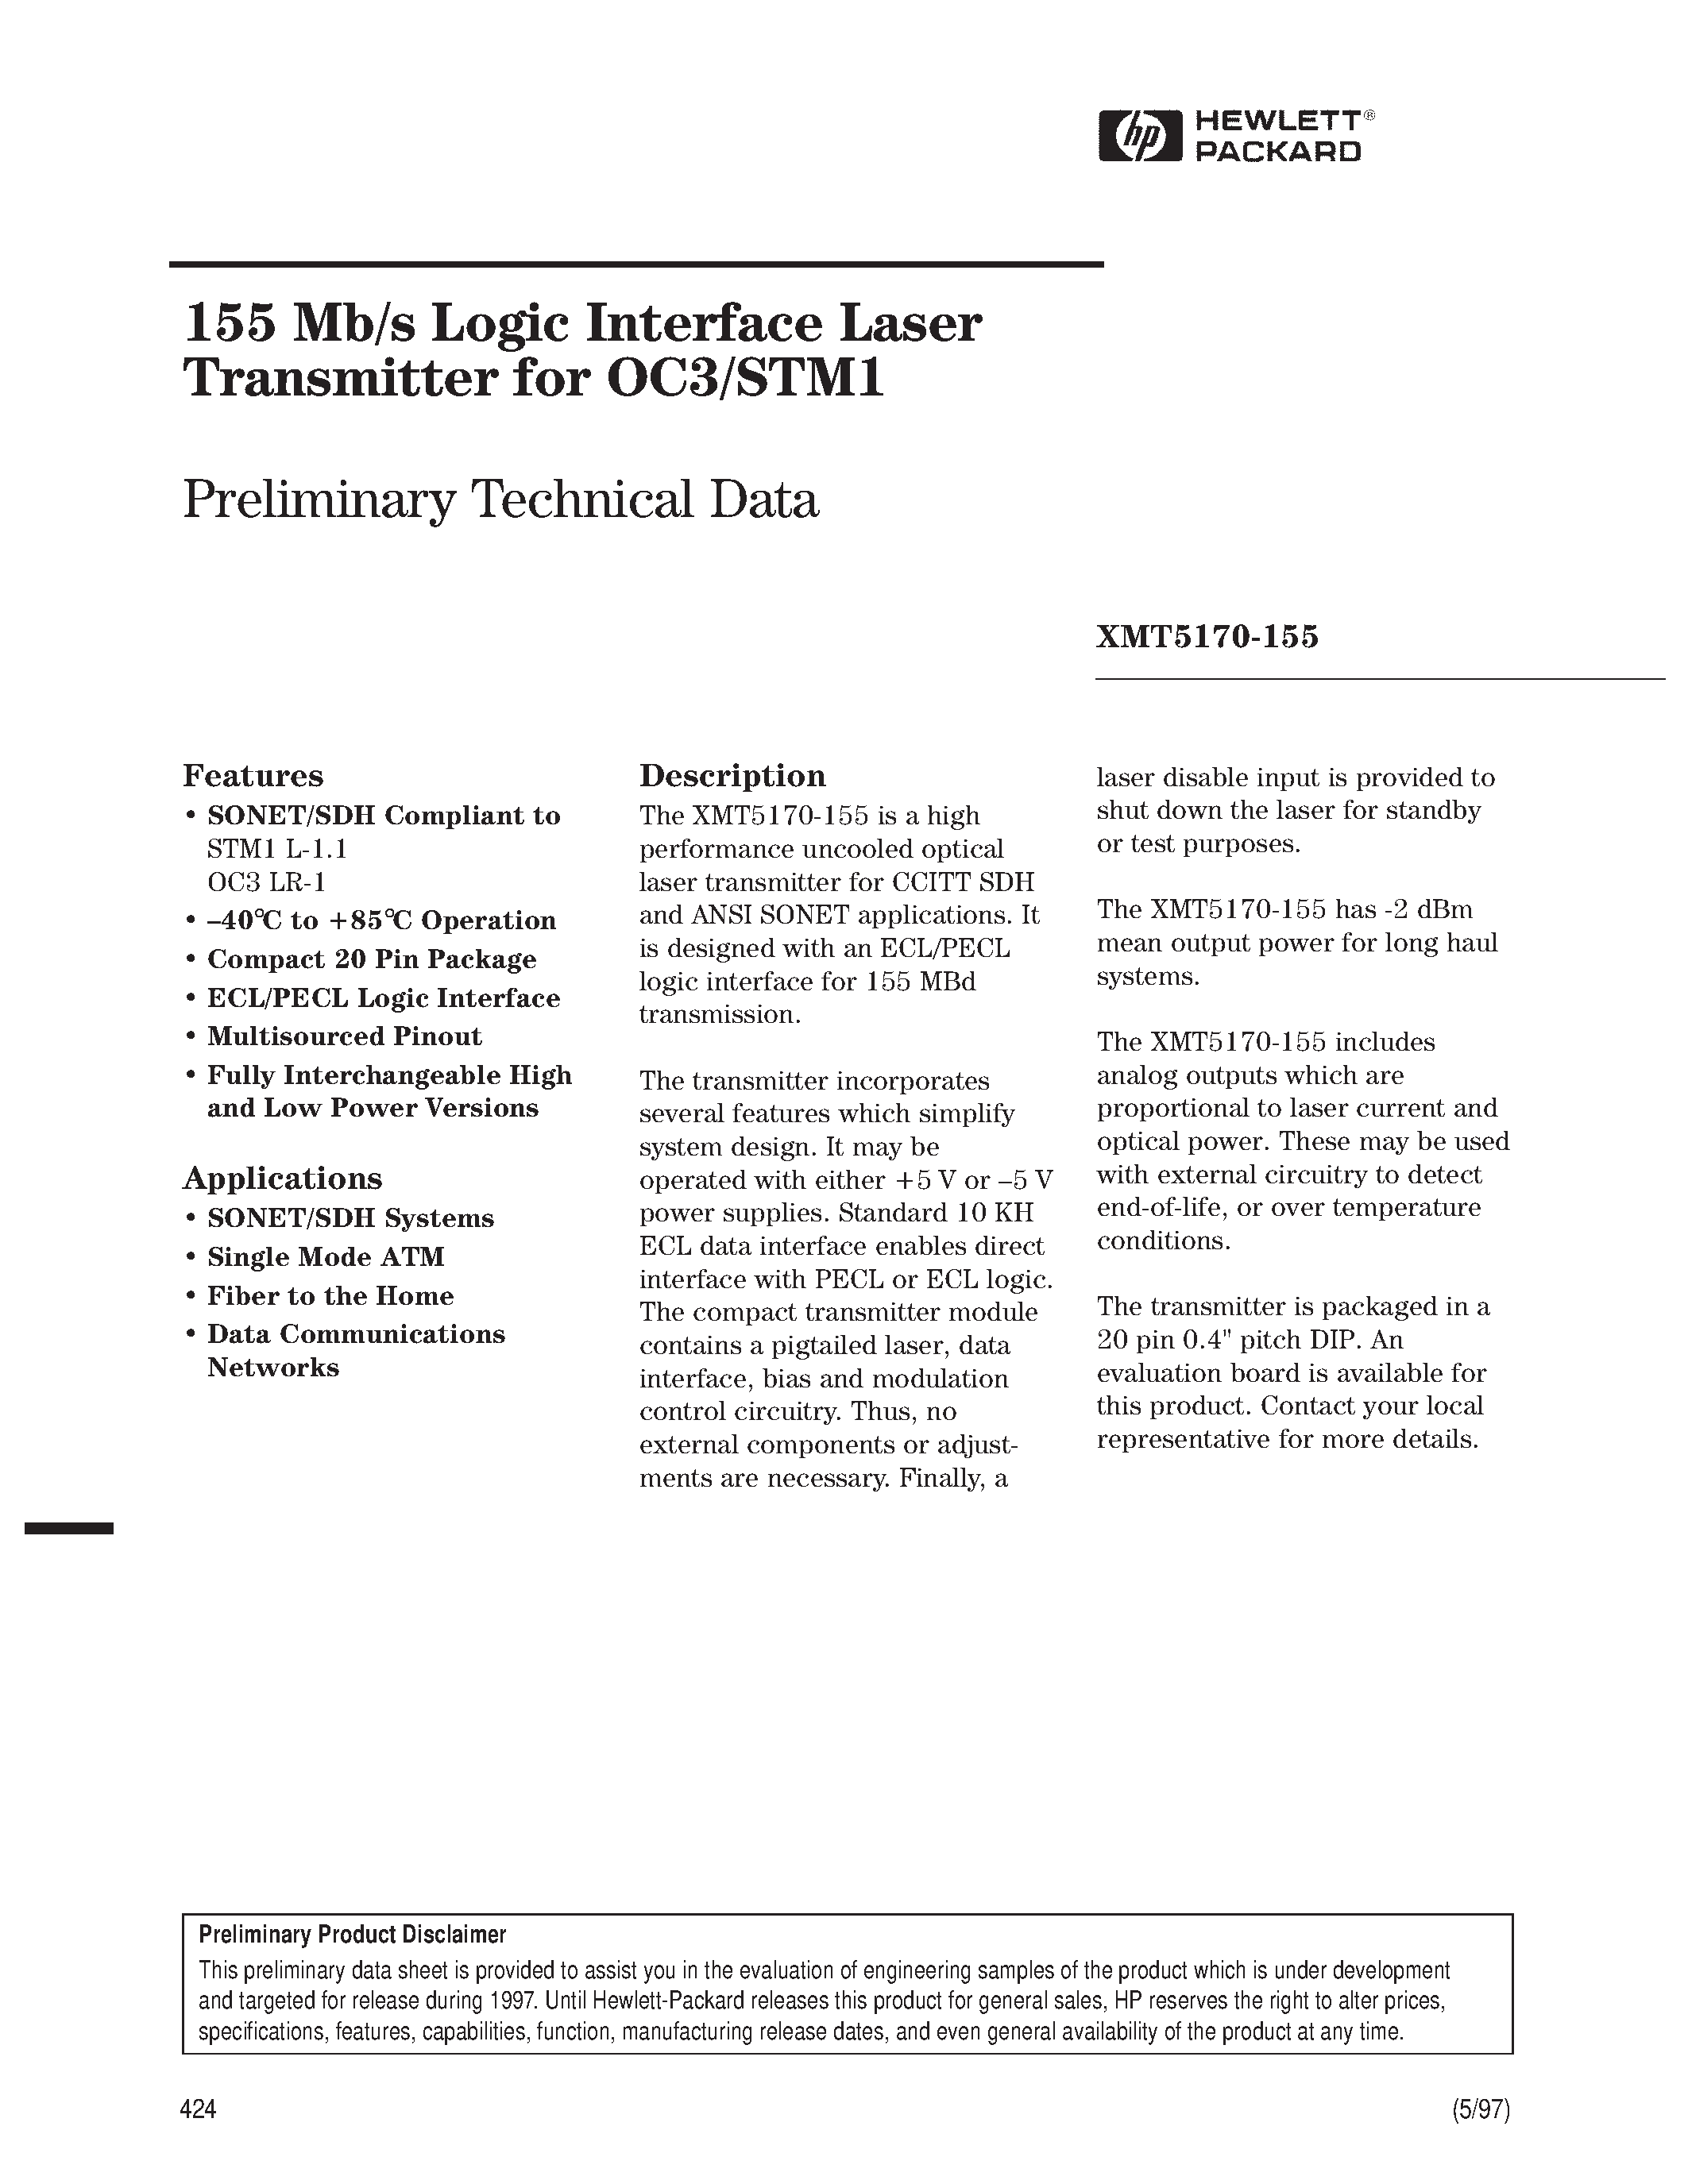 Datasheet XMT5170B-155-ST - 155 Mb/s Logic Interface Laser Transmitter for OC3/STM1 page 1